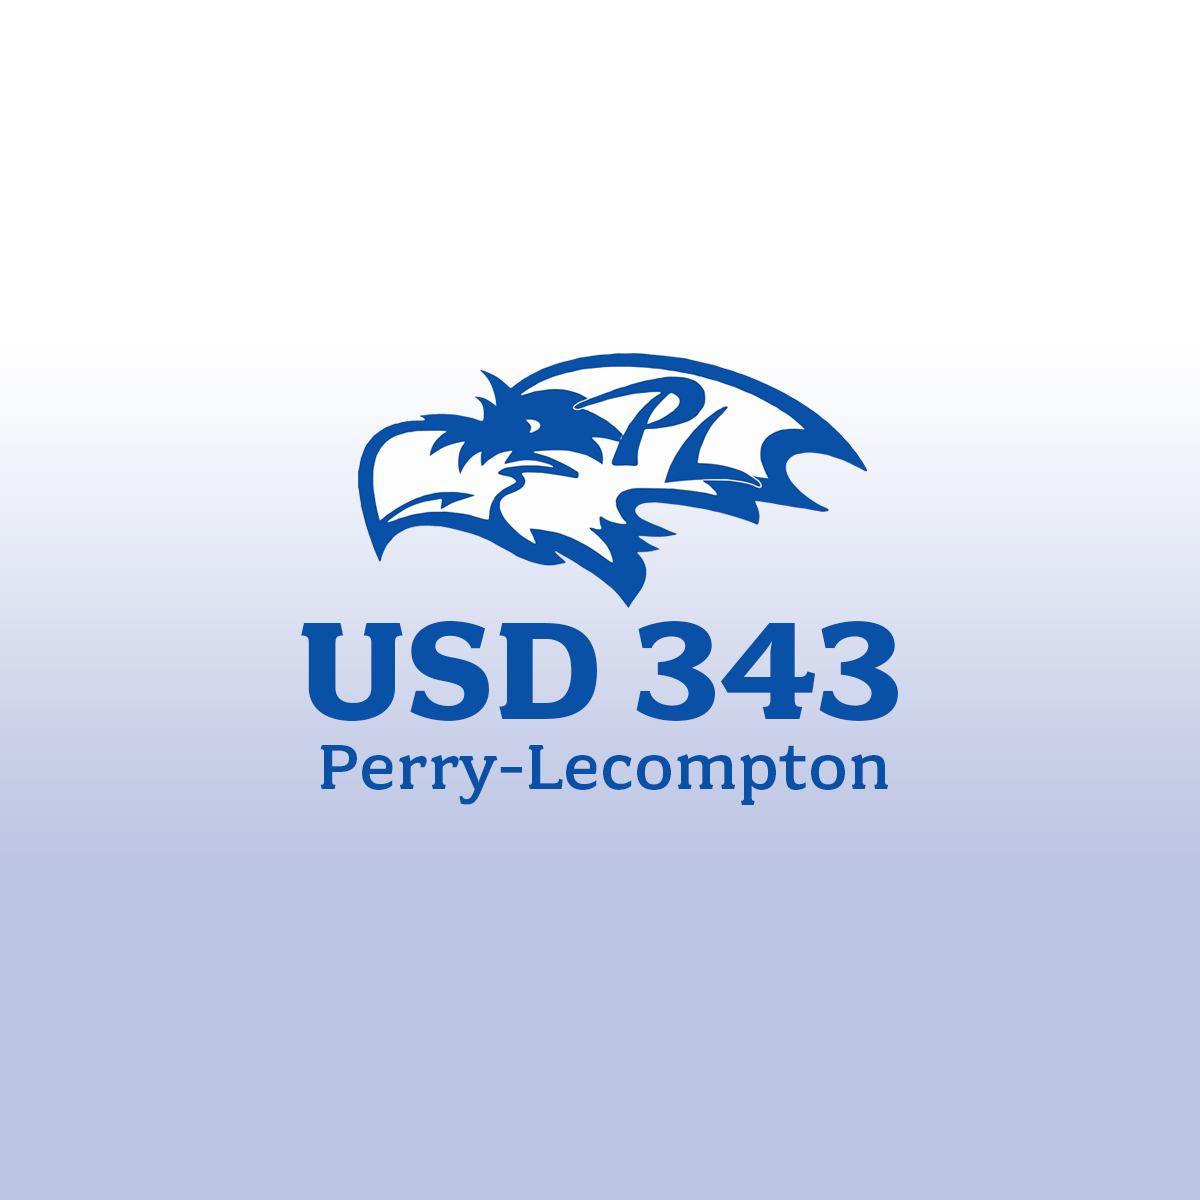 USD 343 Perry Lecompton logo and mascot